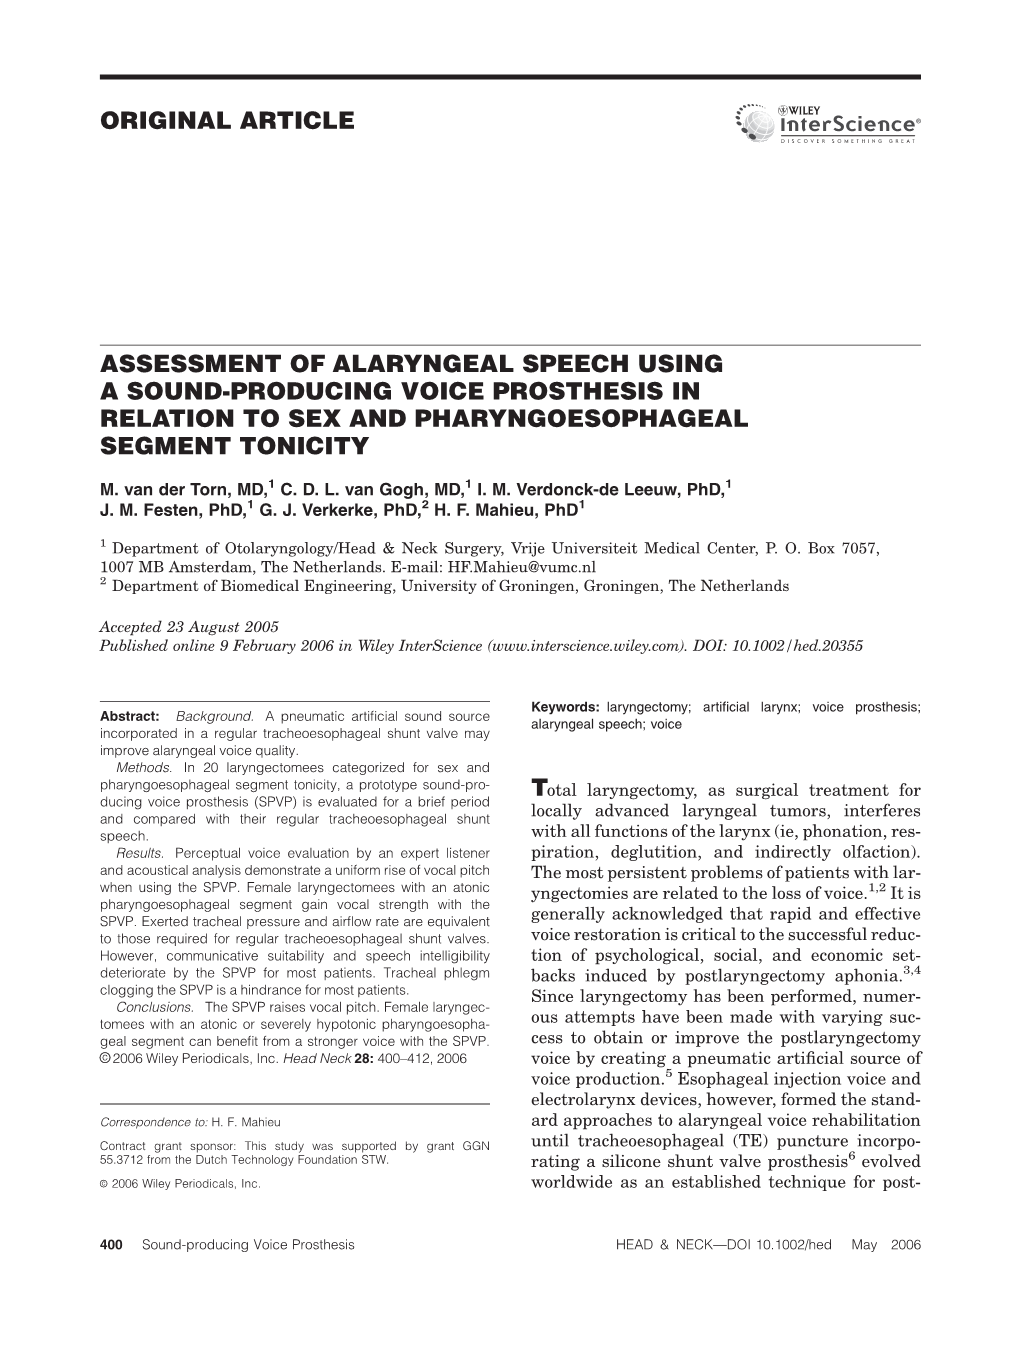 Original Article Assessment of Alaryngeal Speech Using